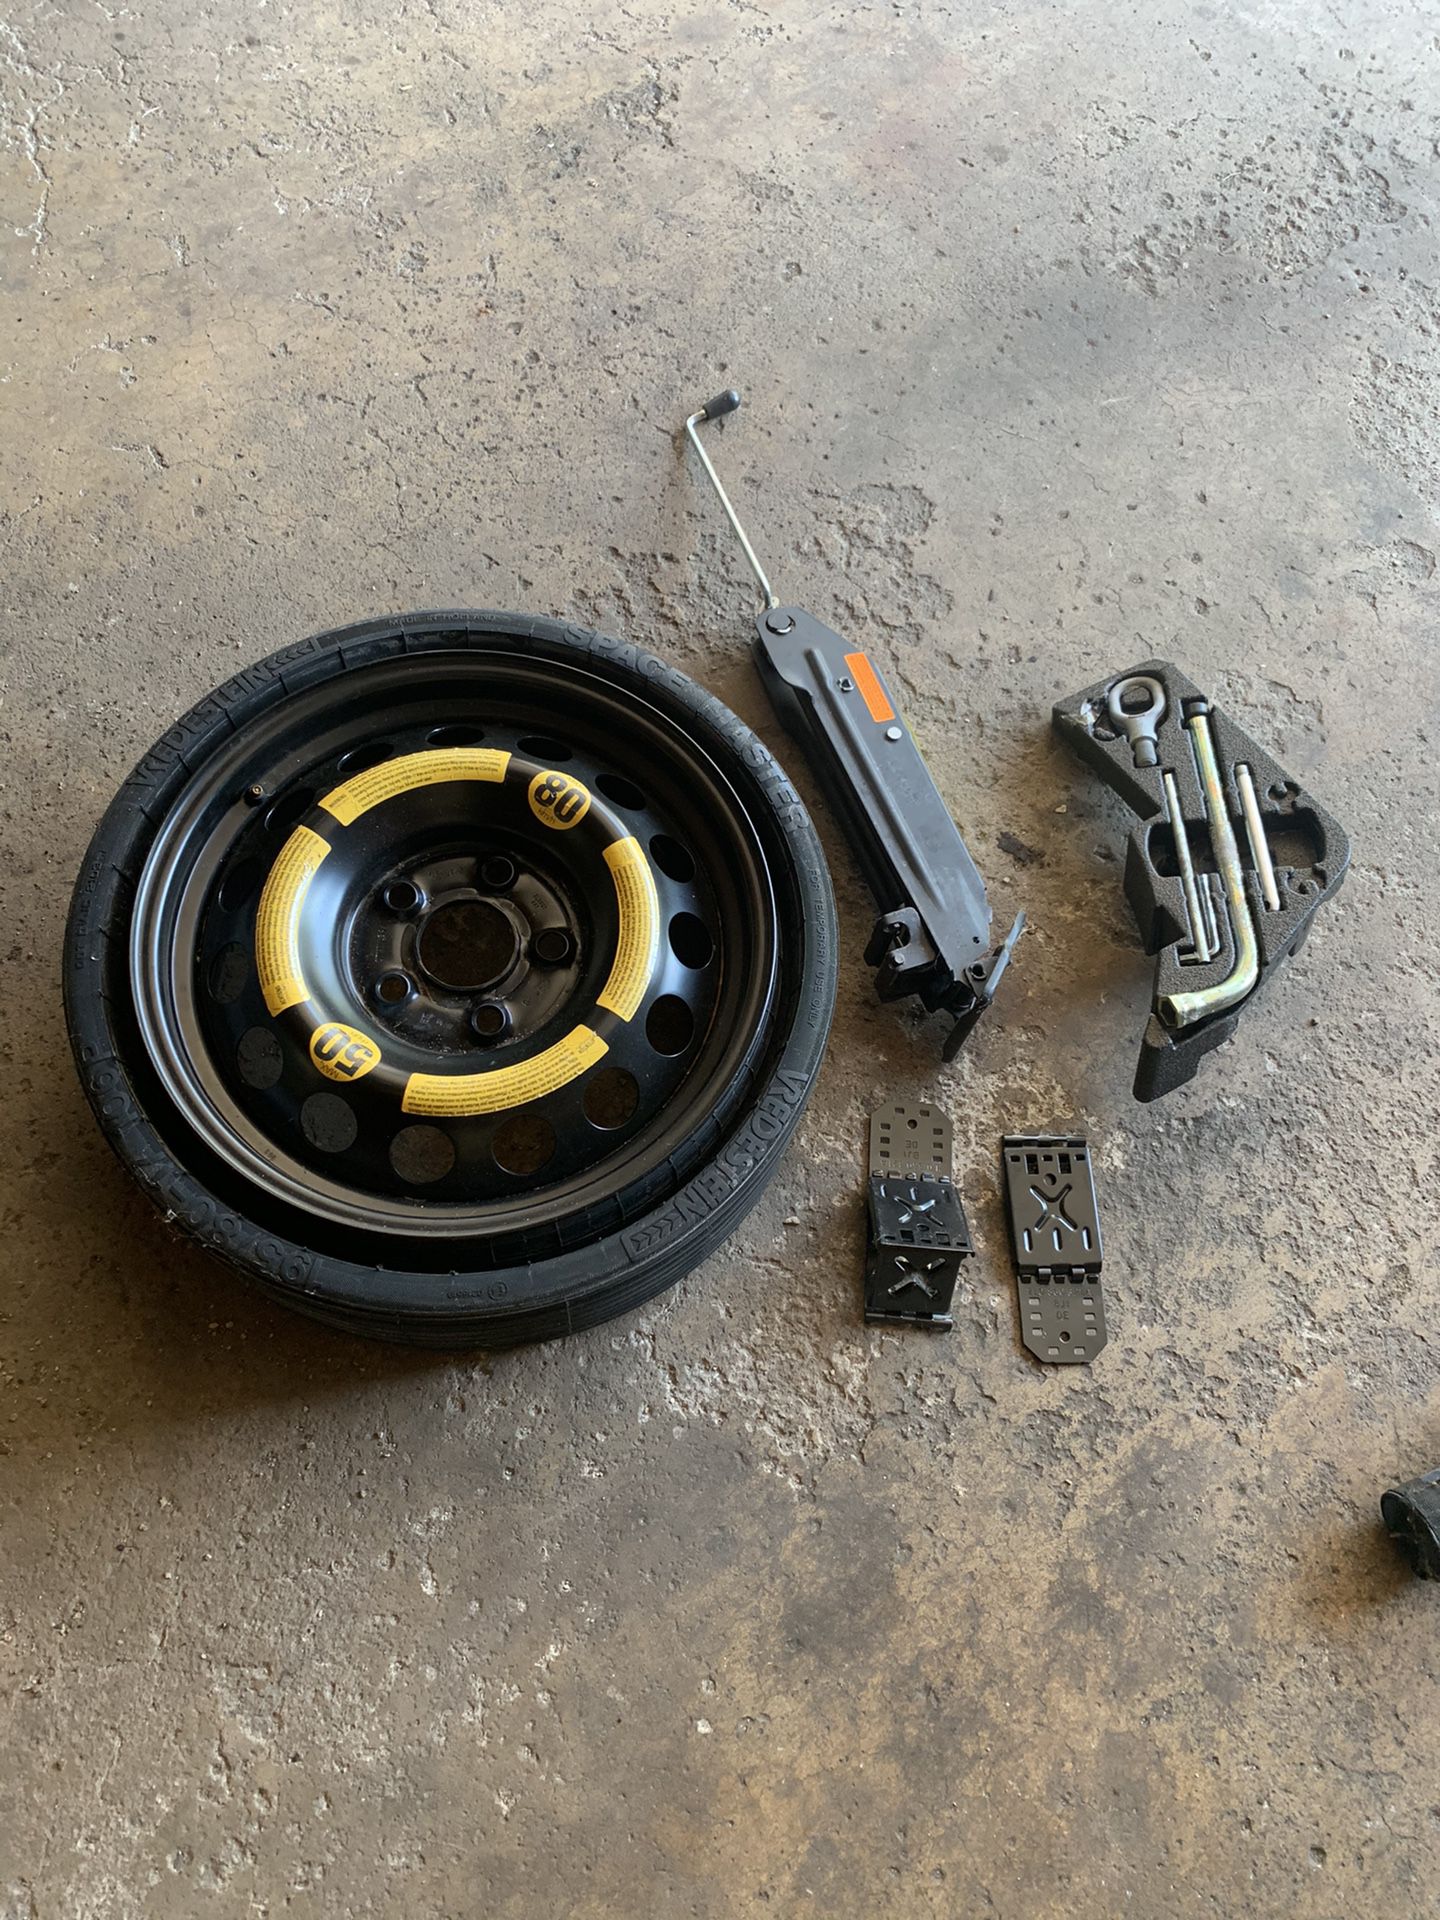 Volkswagen spare tire kit